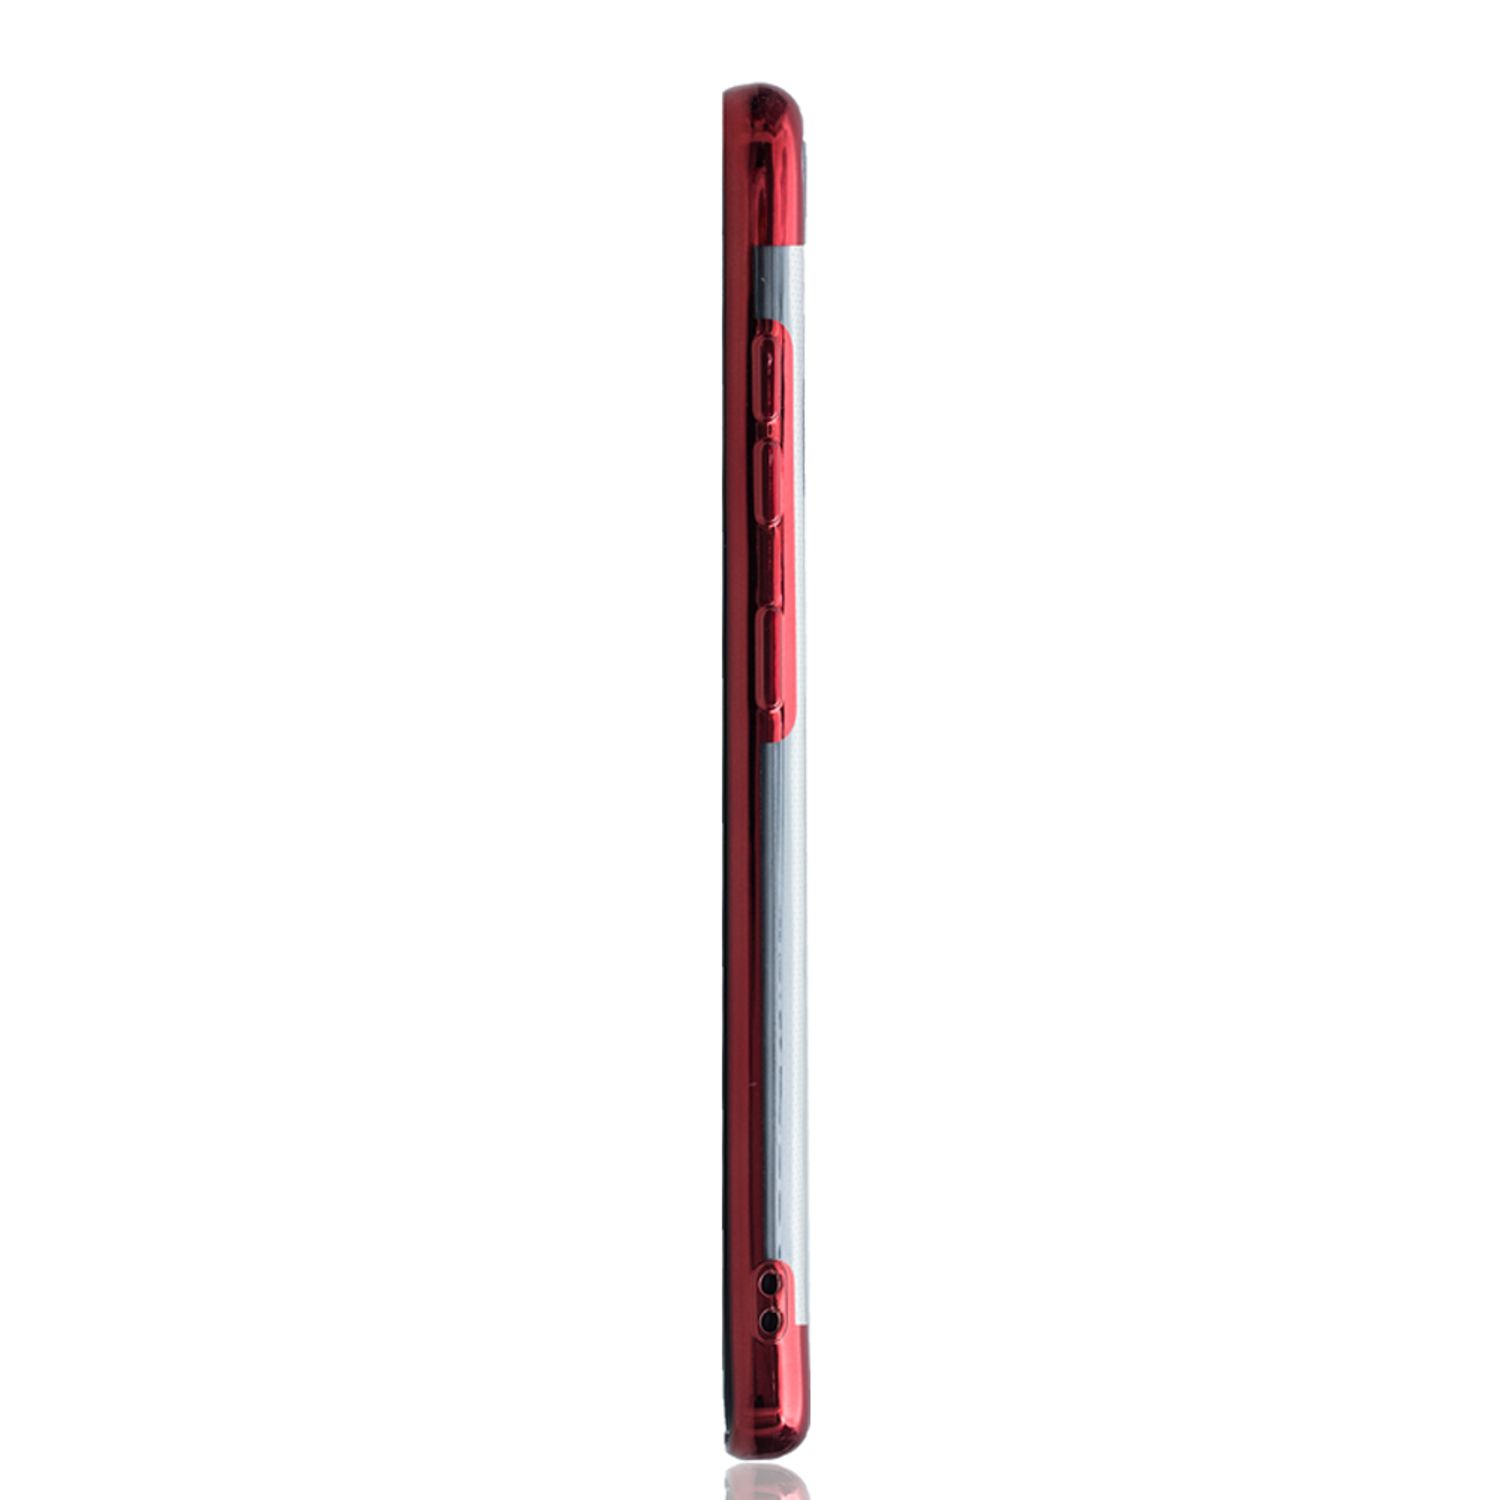 Galaxy Rot KÖNIG S20 Schutzhülle, Samsung, Backcover, Ultra, DESIGN